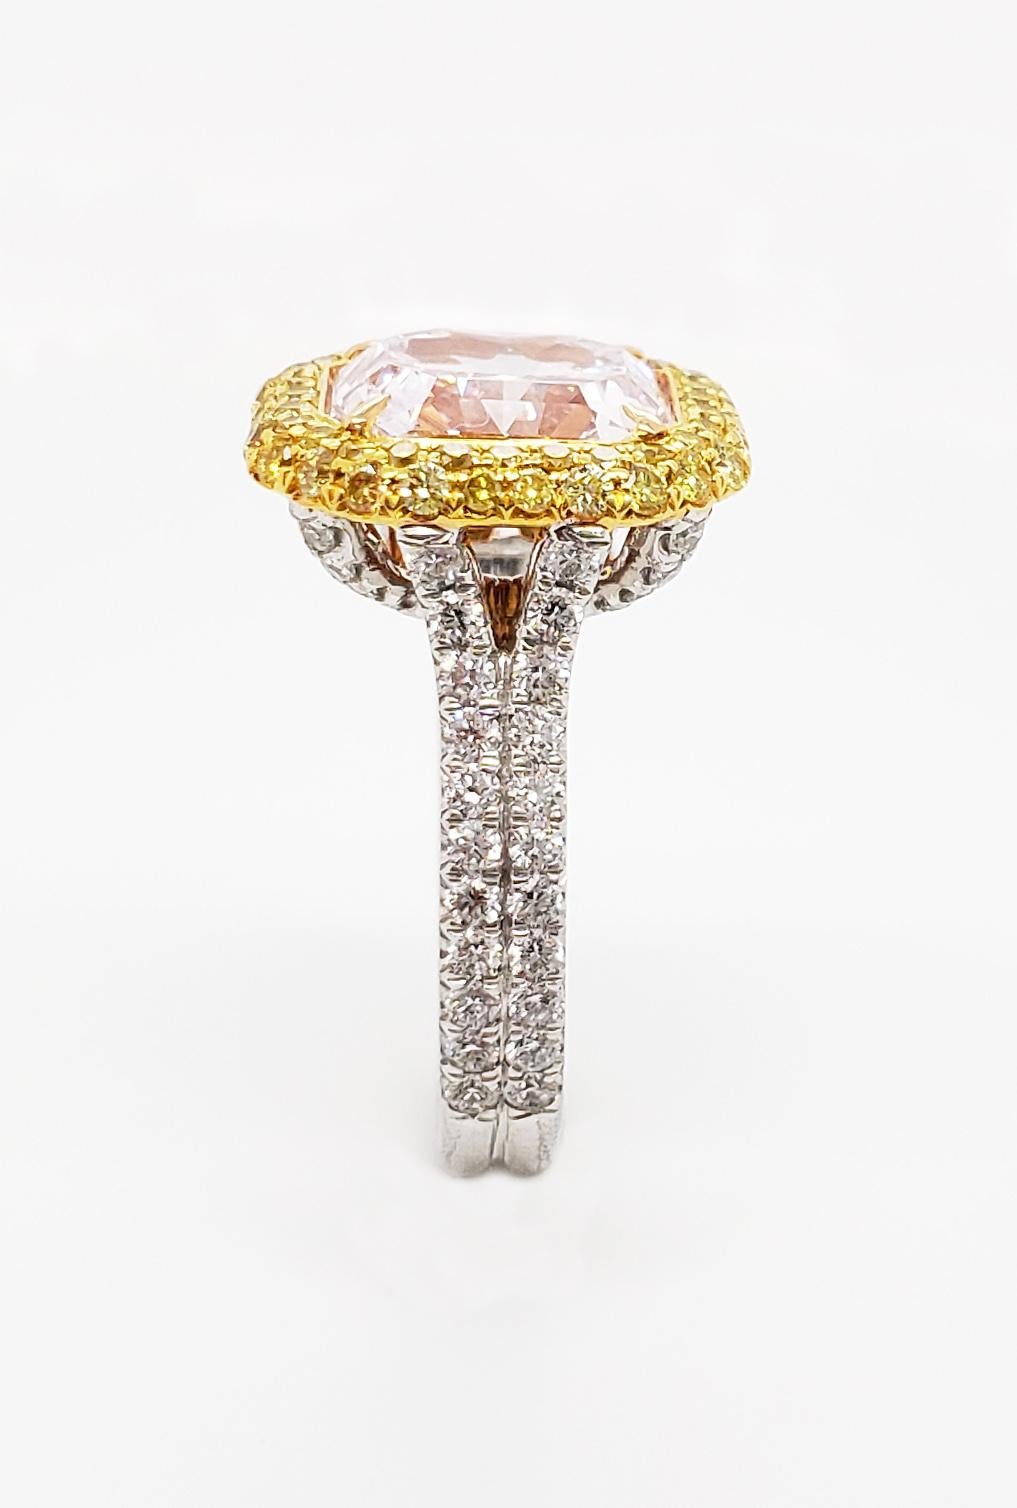 Radiant Cut Scarselli Platinum Ring 4 Carat Radiant Fancy Light Pinkish Purple Diamond  For Sale